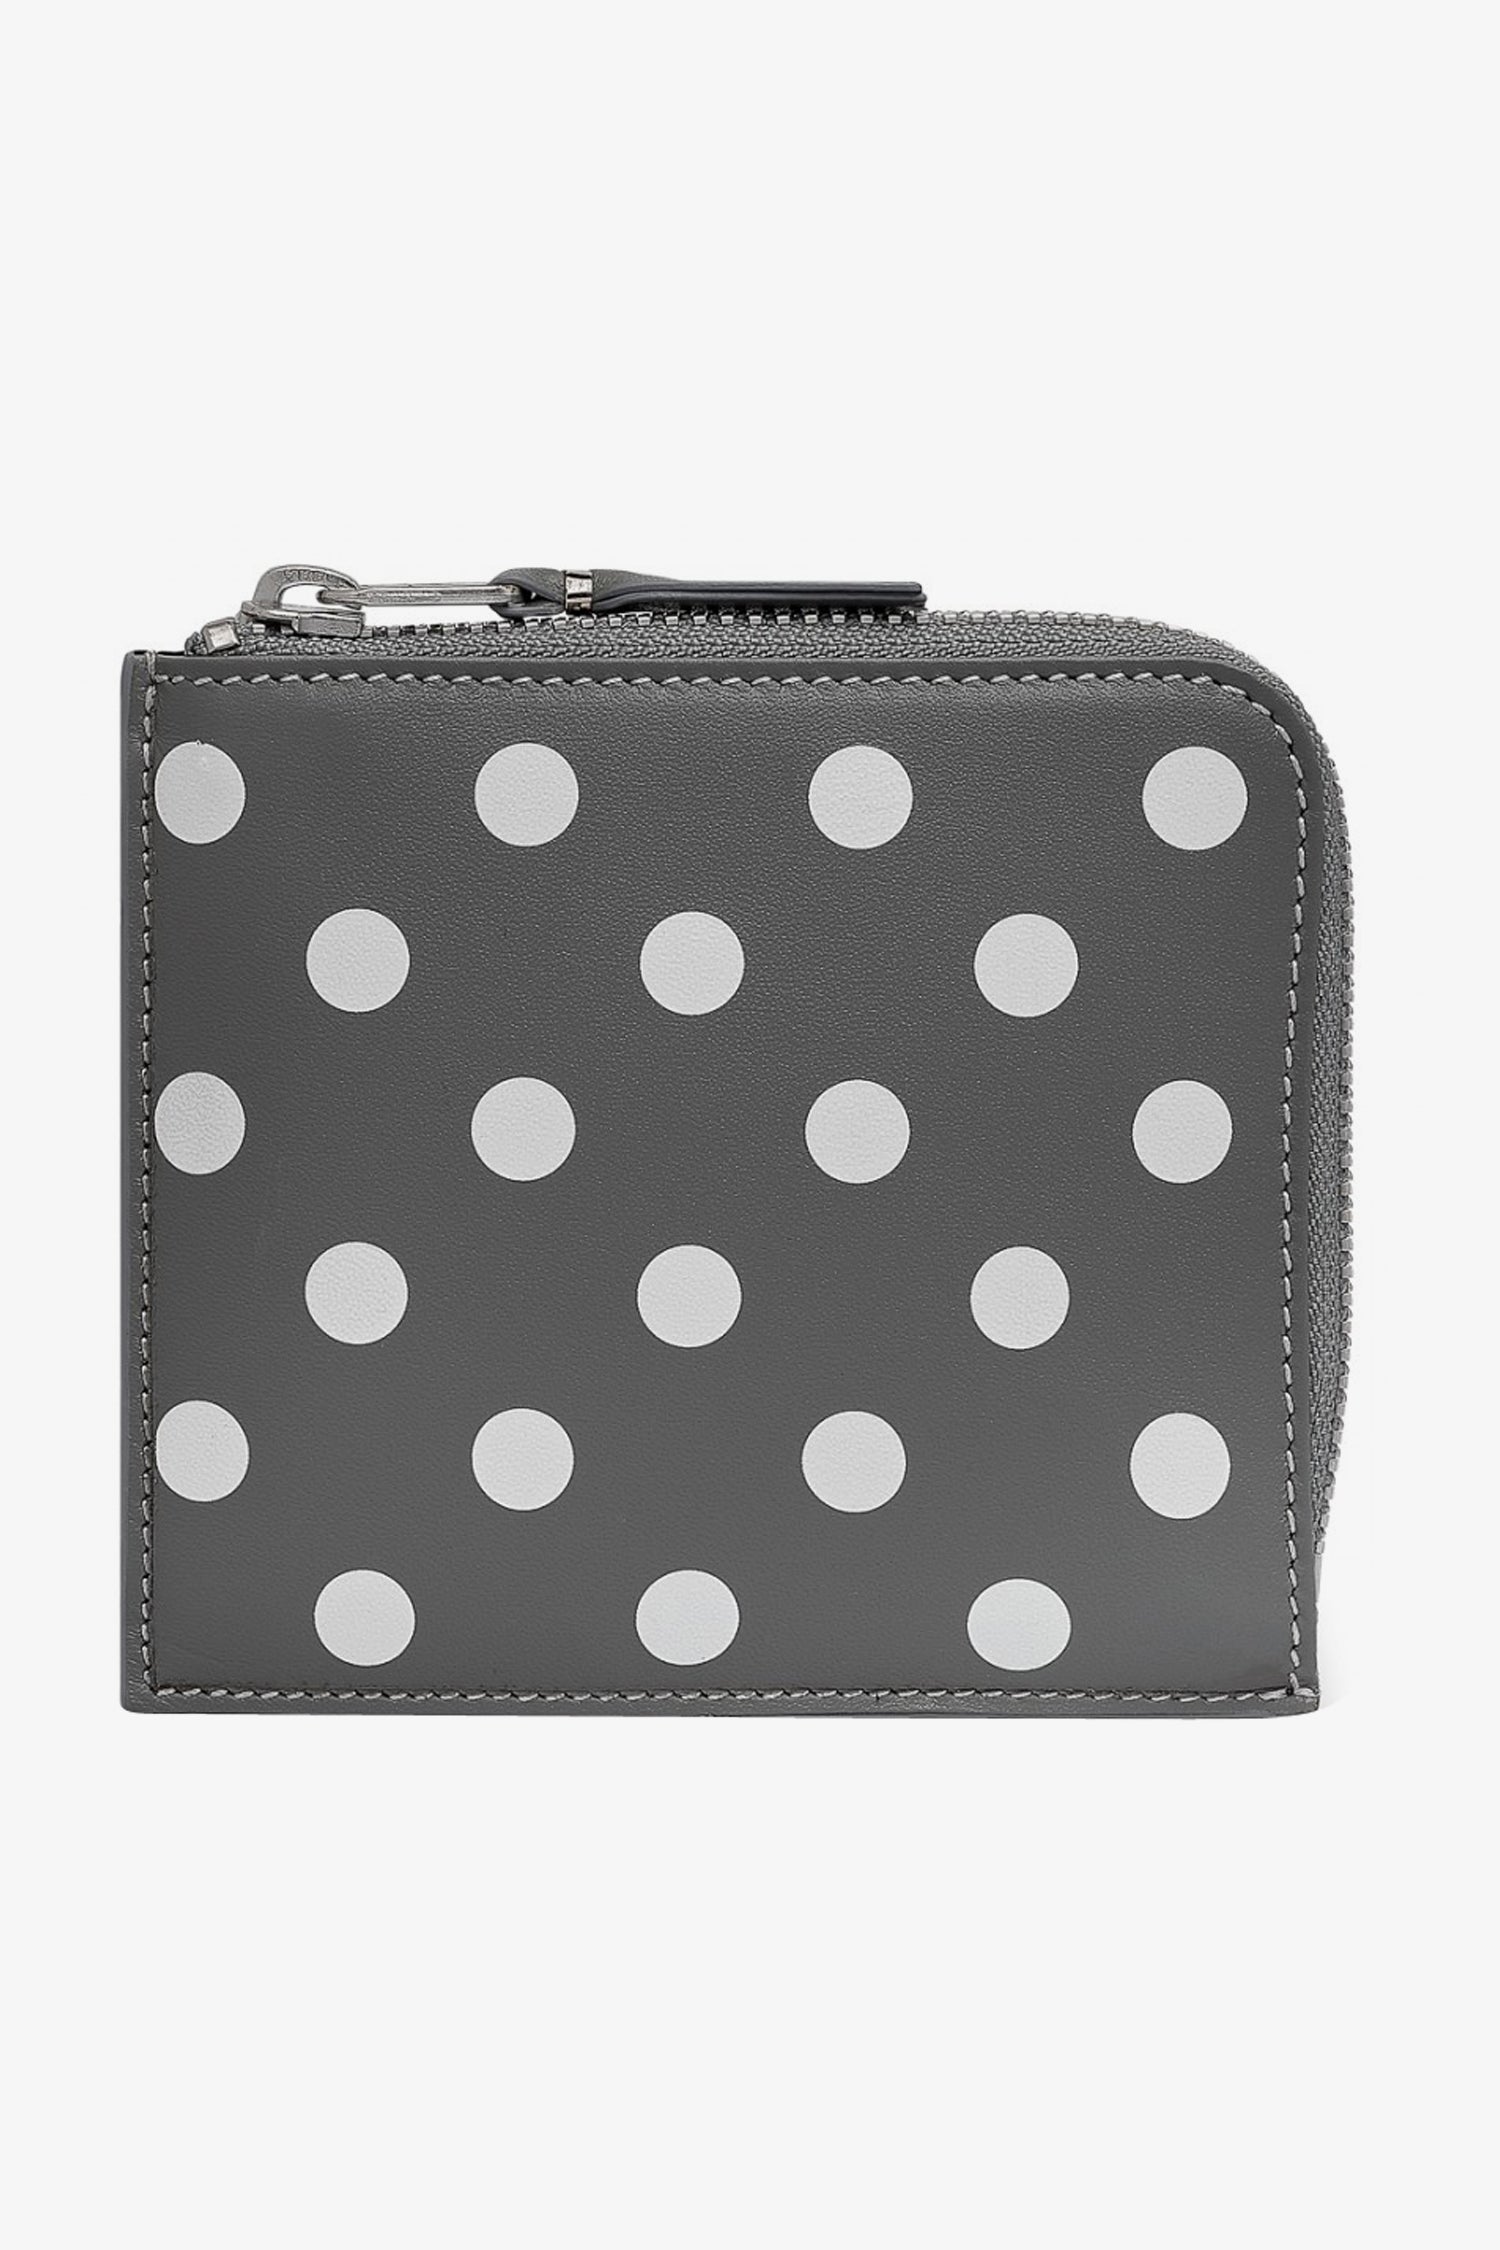 Selectshop FRAME - COMME DES GARCONS WALLETS Polka Dot Leather Wallet (SA3100PD) Accessories Dubai